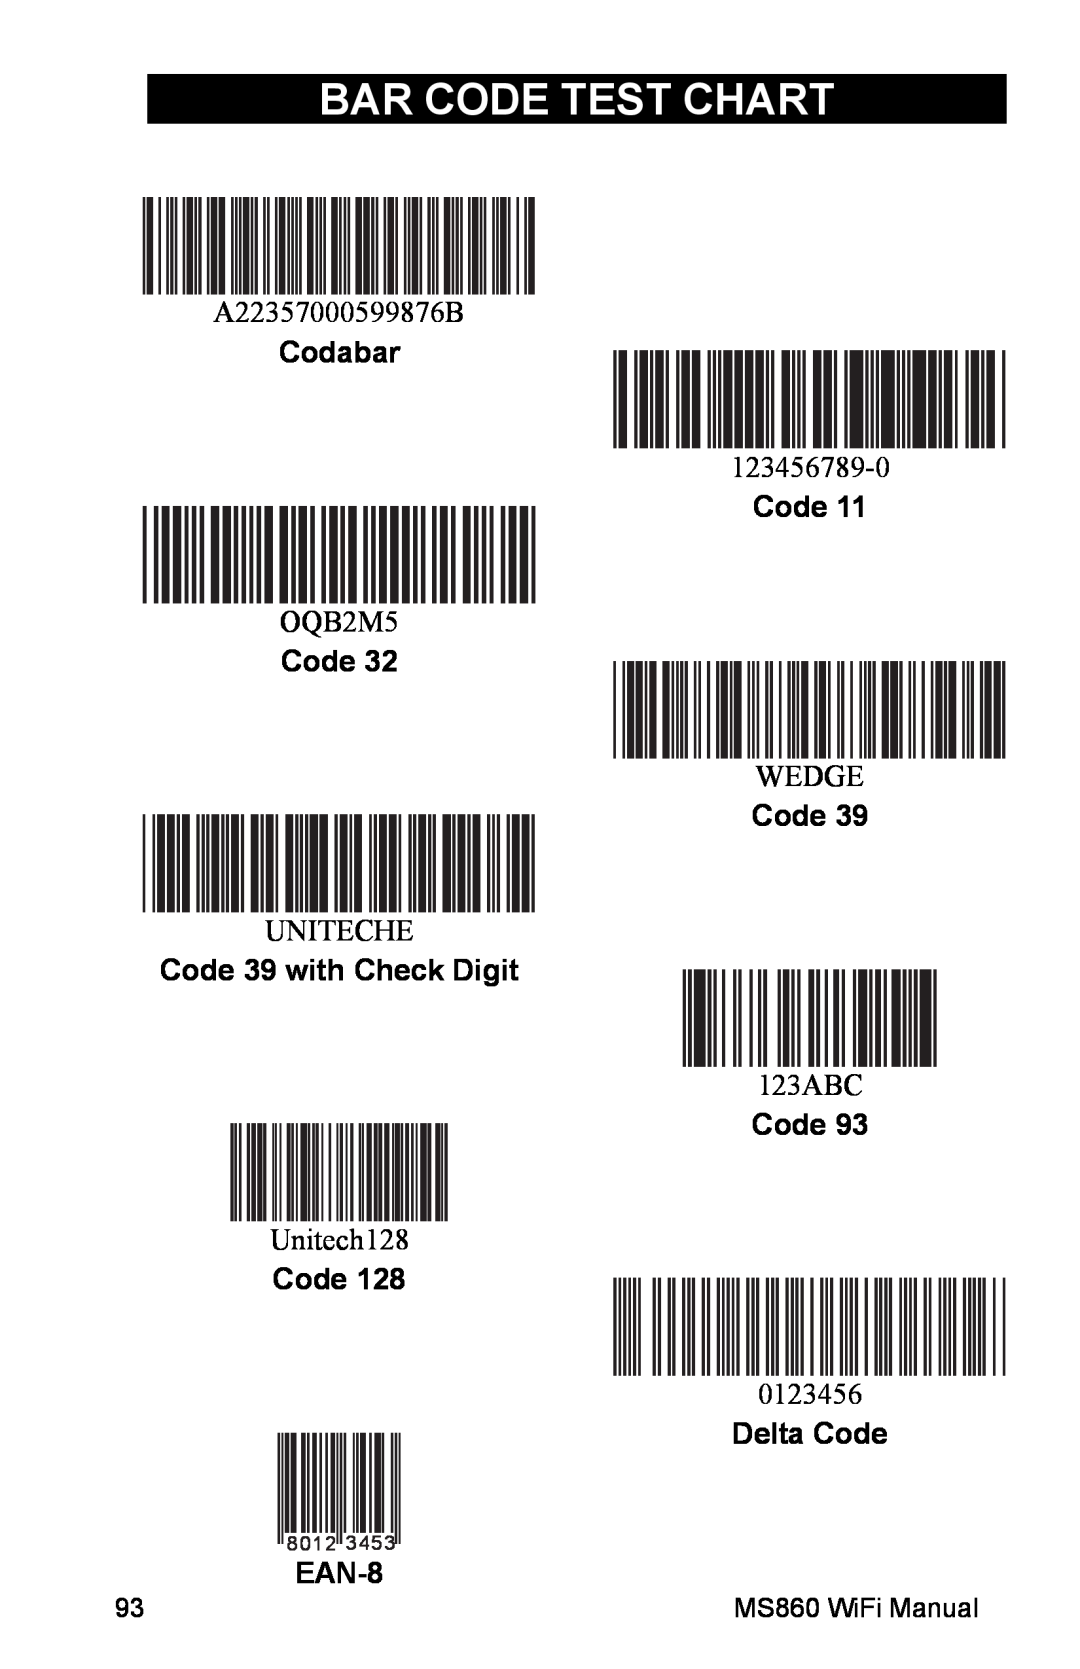 Unitech MS860 Bar Code Test Chart, A22357000599876B, Codabar, 123456789-0, OQB2M5, Wedge, Uniteche, 123ABC, Unitech128 